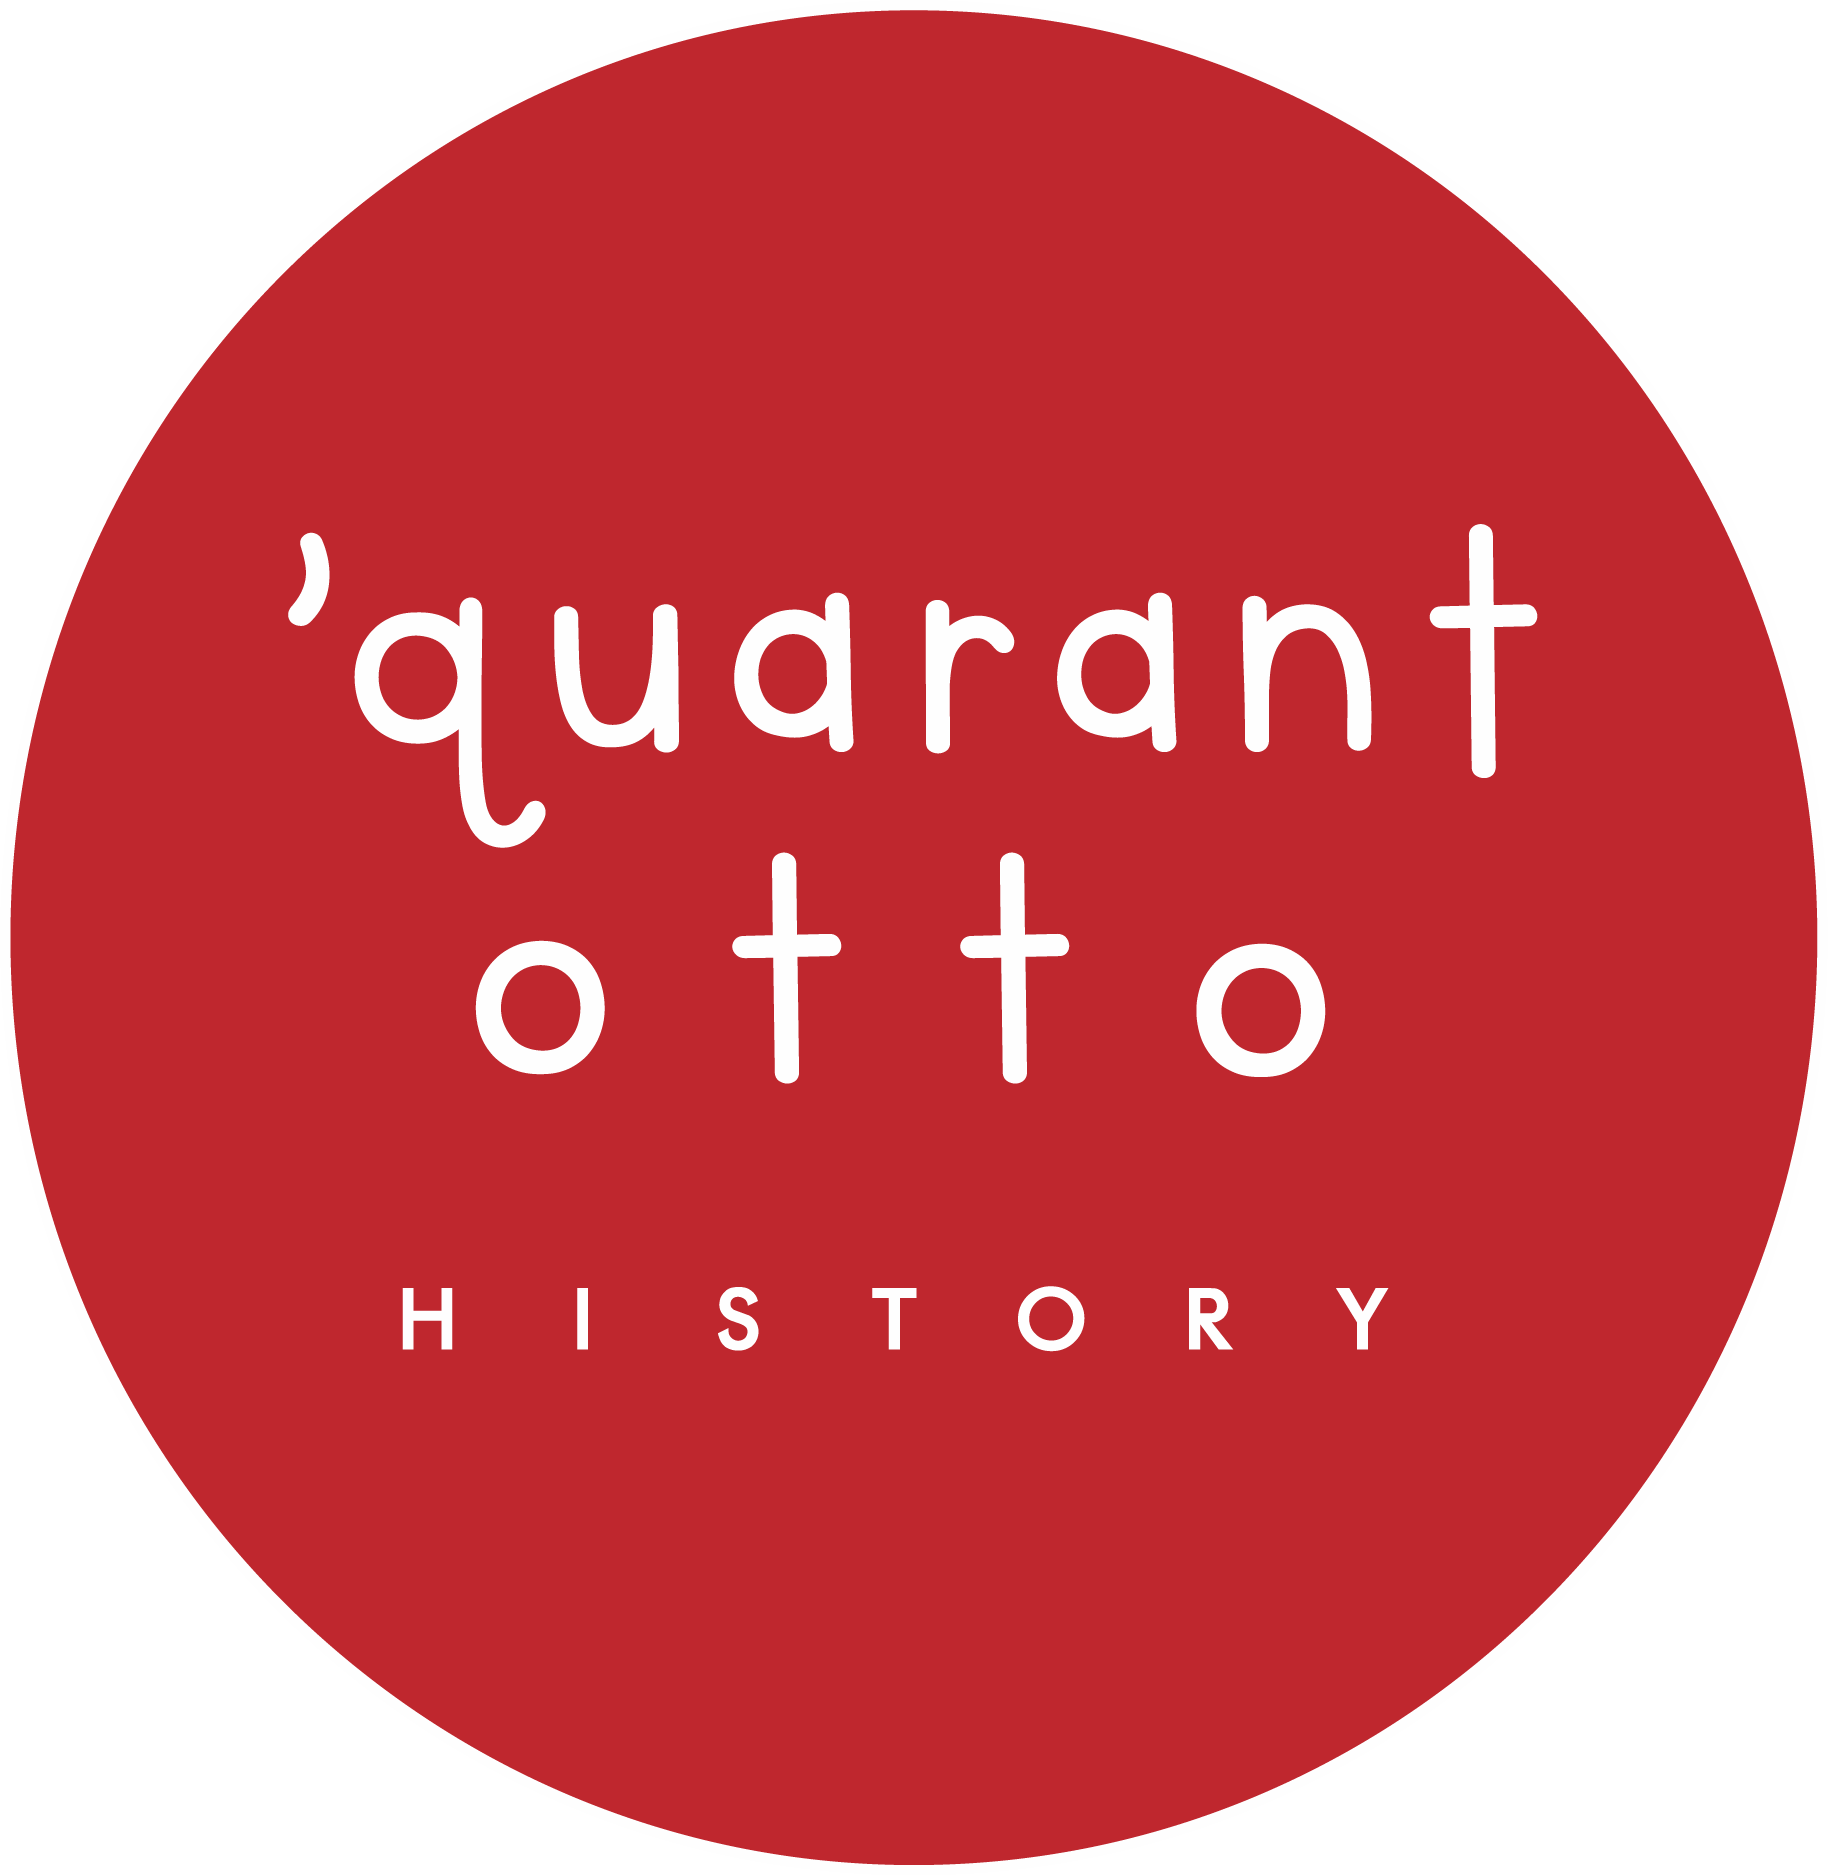 'Quarantottohistory Potenza